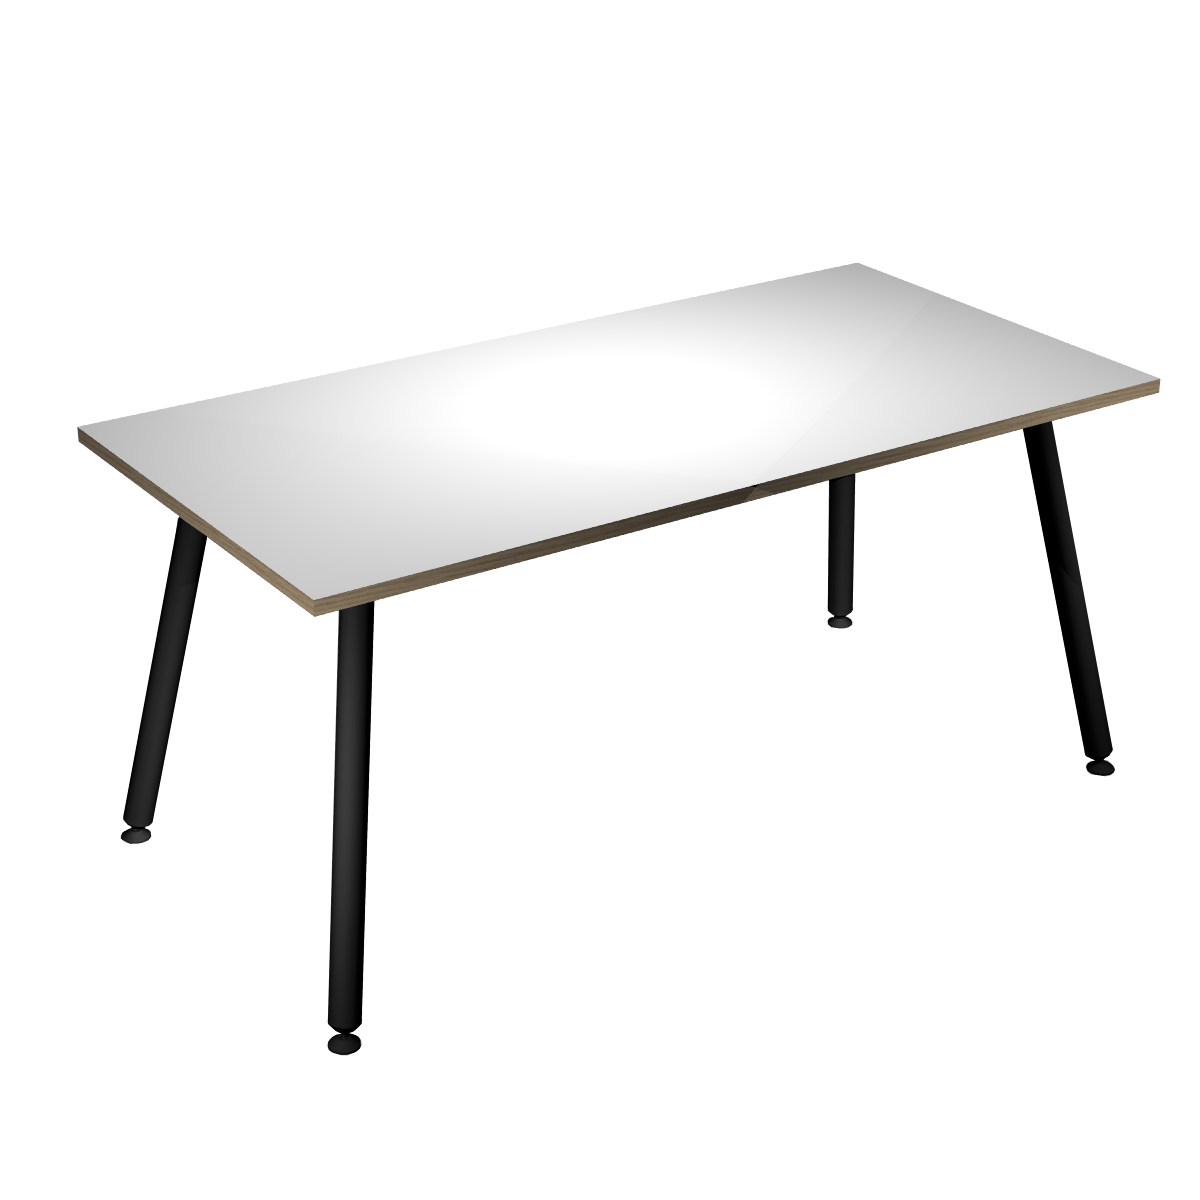 Table haute LEONARDO - 180 x 80 x 105 cm - Pieds métal noirs - Blanc chants chêne